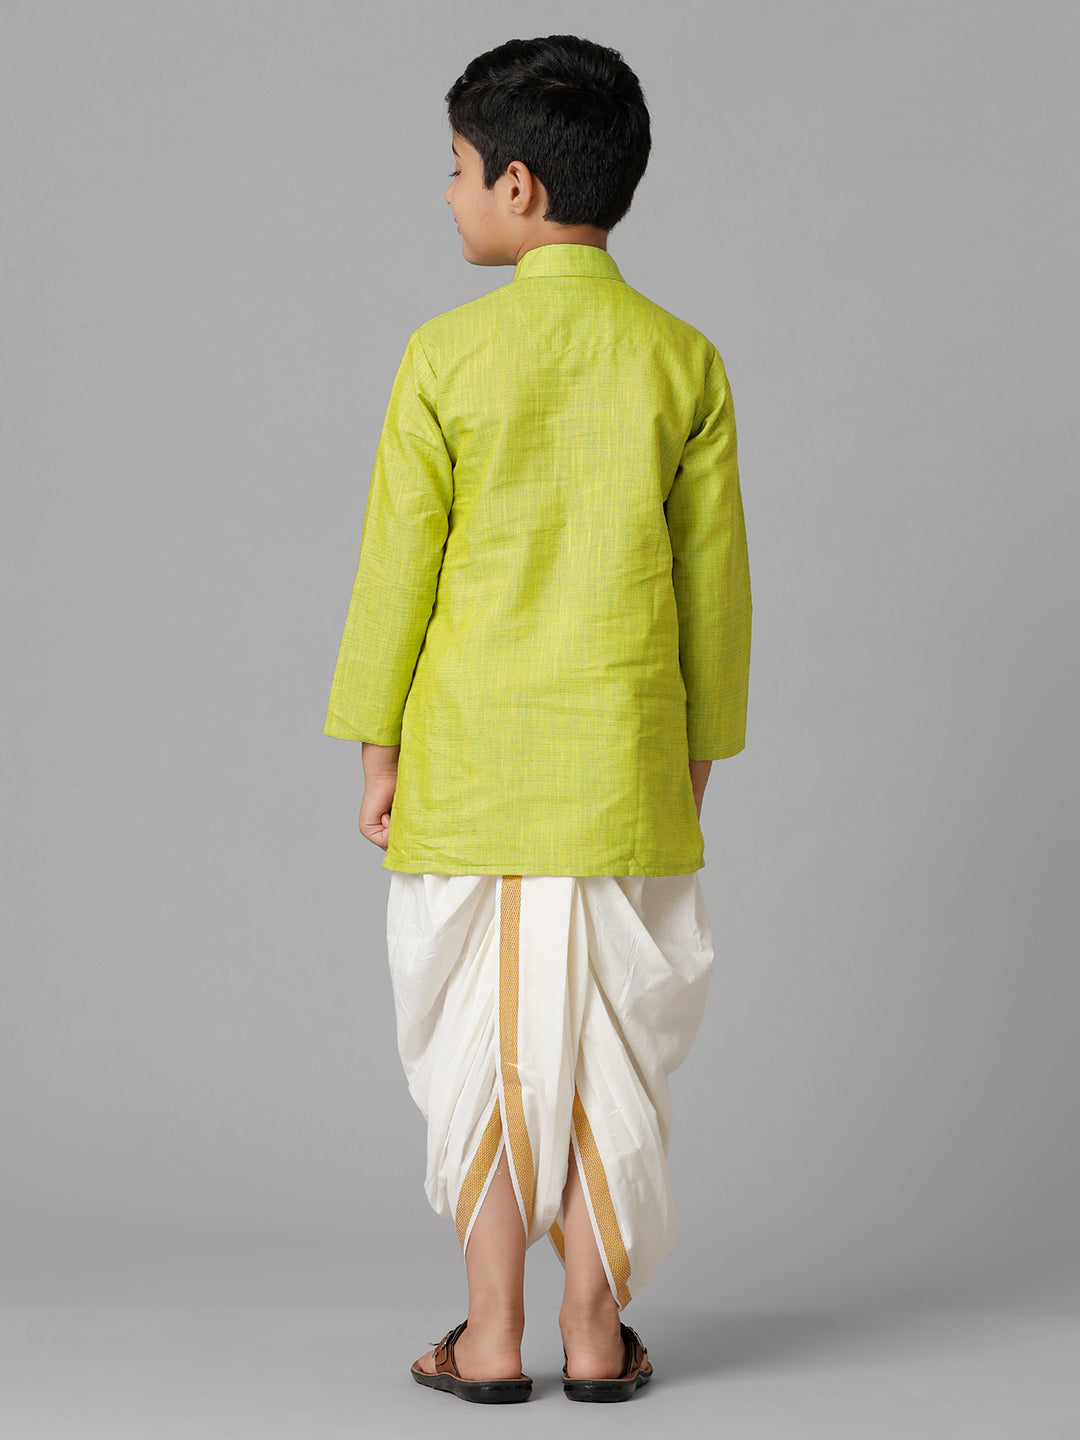 Boys Cotton Parrot Green Kurta with Cream Elastic Panchakacham Towel Combo FS2-Back view